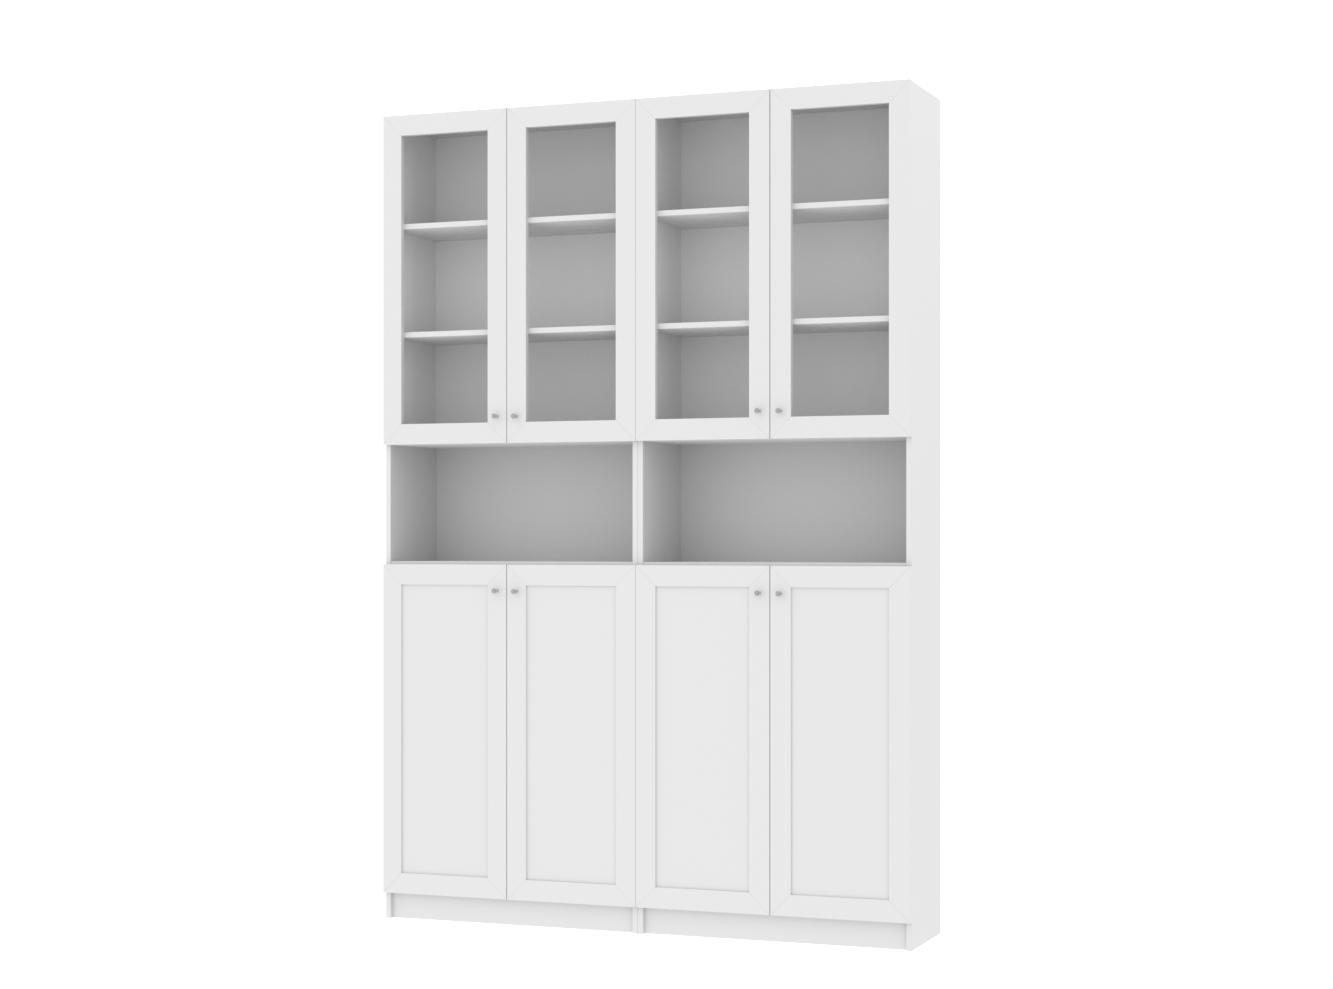 Книжный шкаф Билли 341 white ИКЕА (IKEA) изображение товара